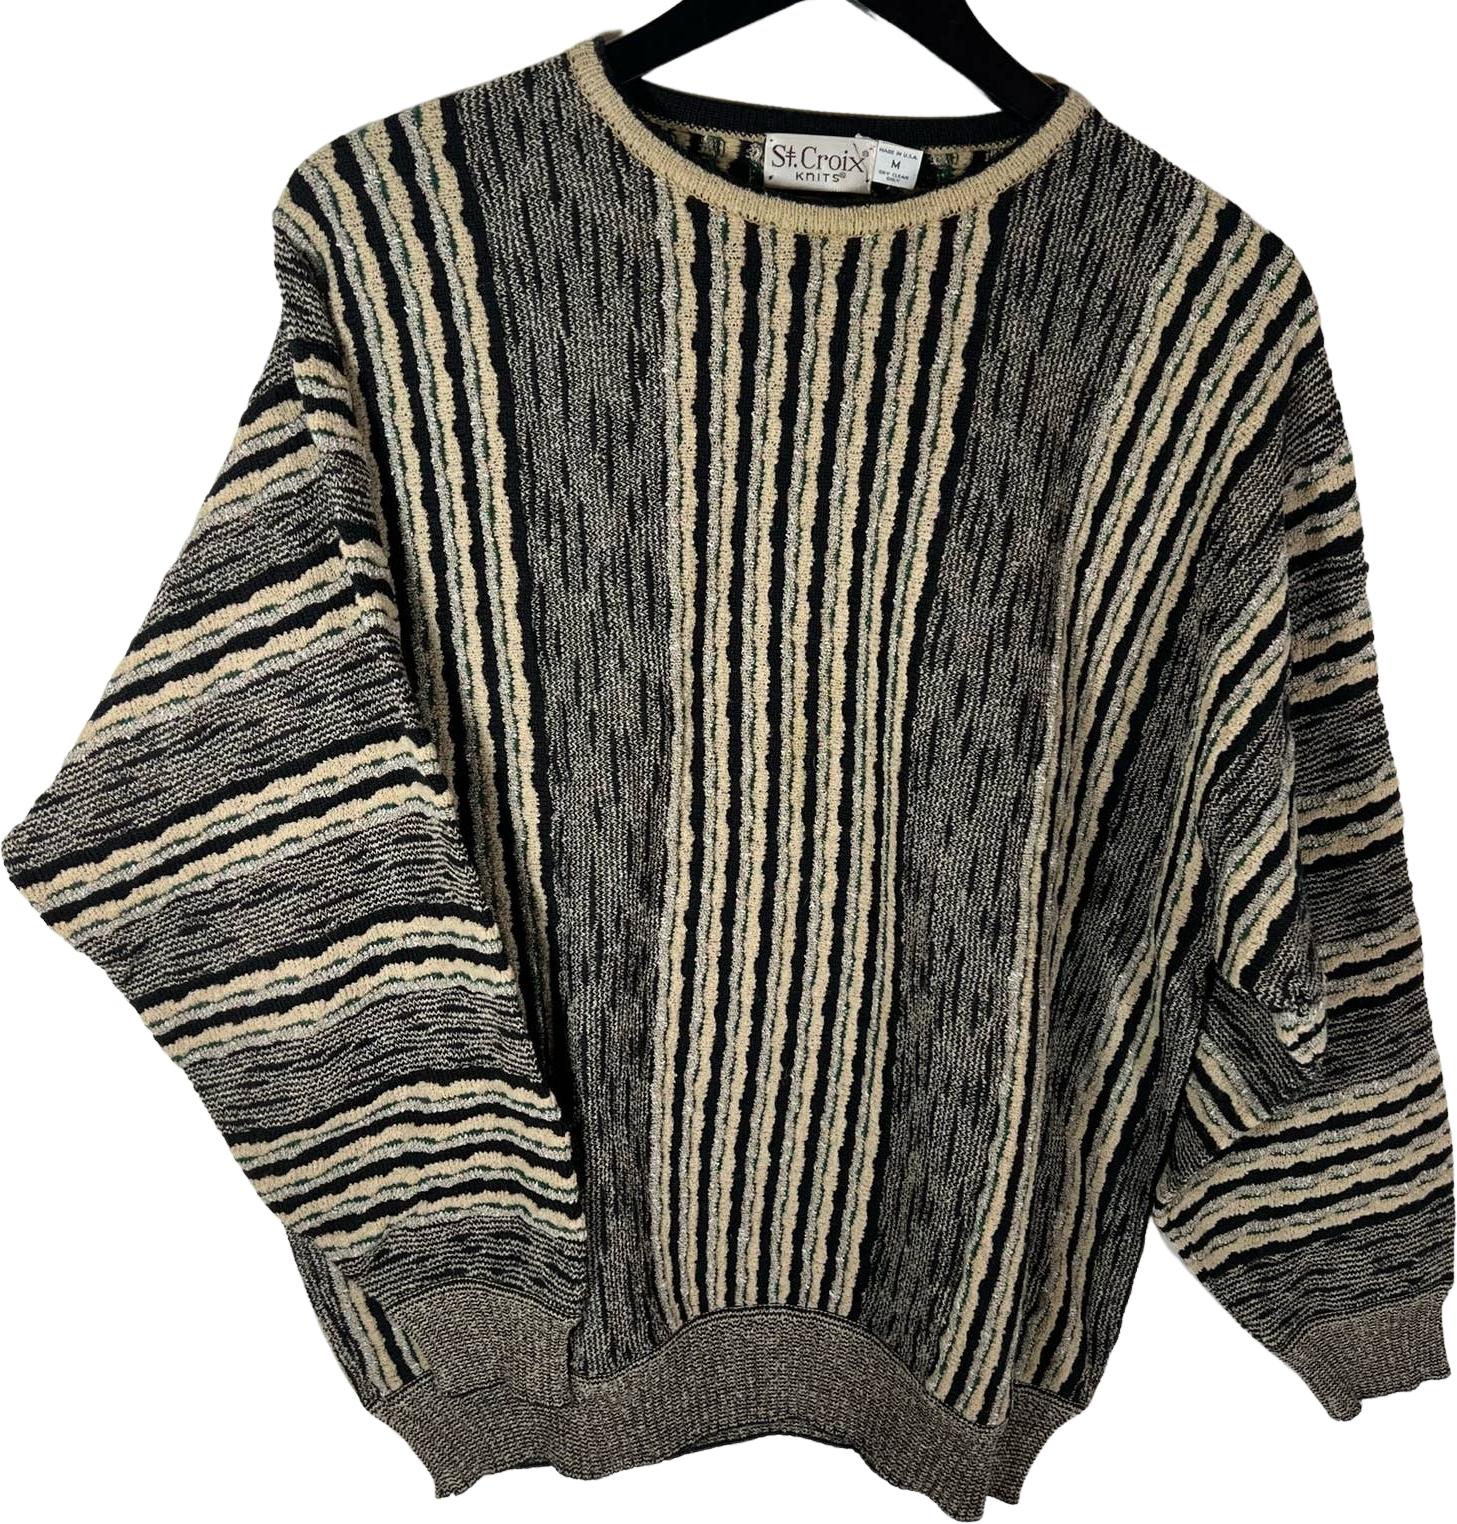 bill cosby striped sweater